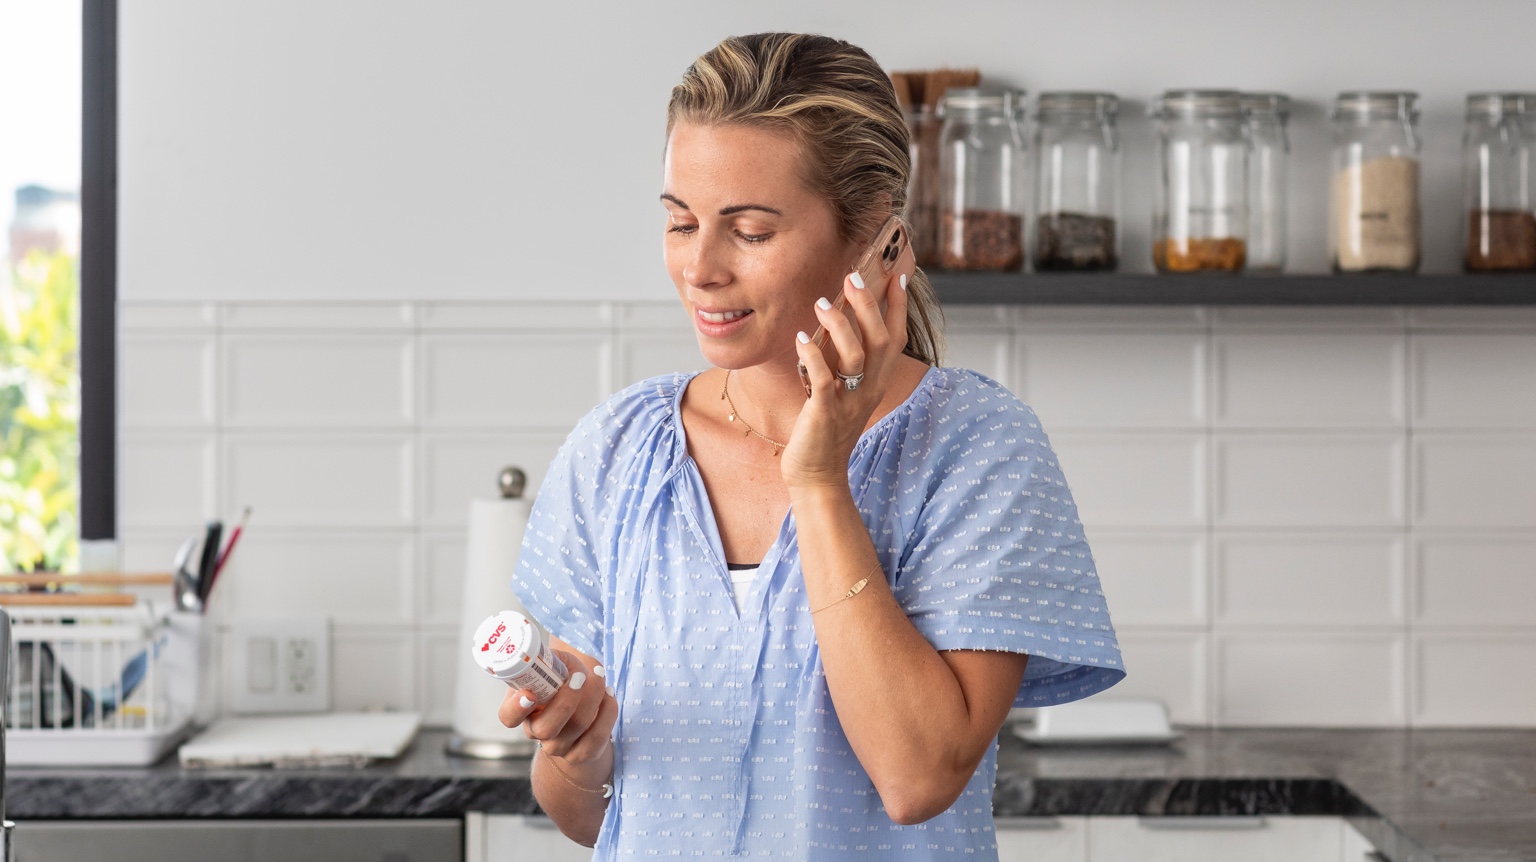 Woman at home talking on phone holding a CVS prescription bottle.